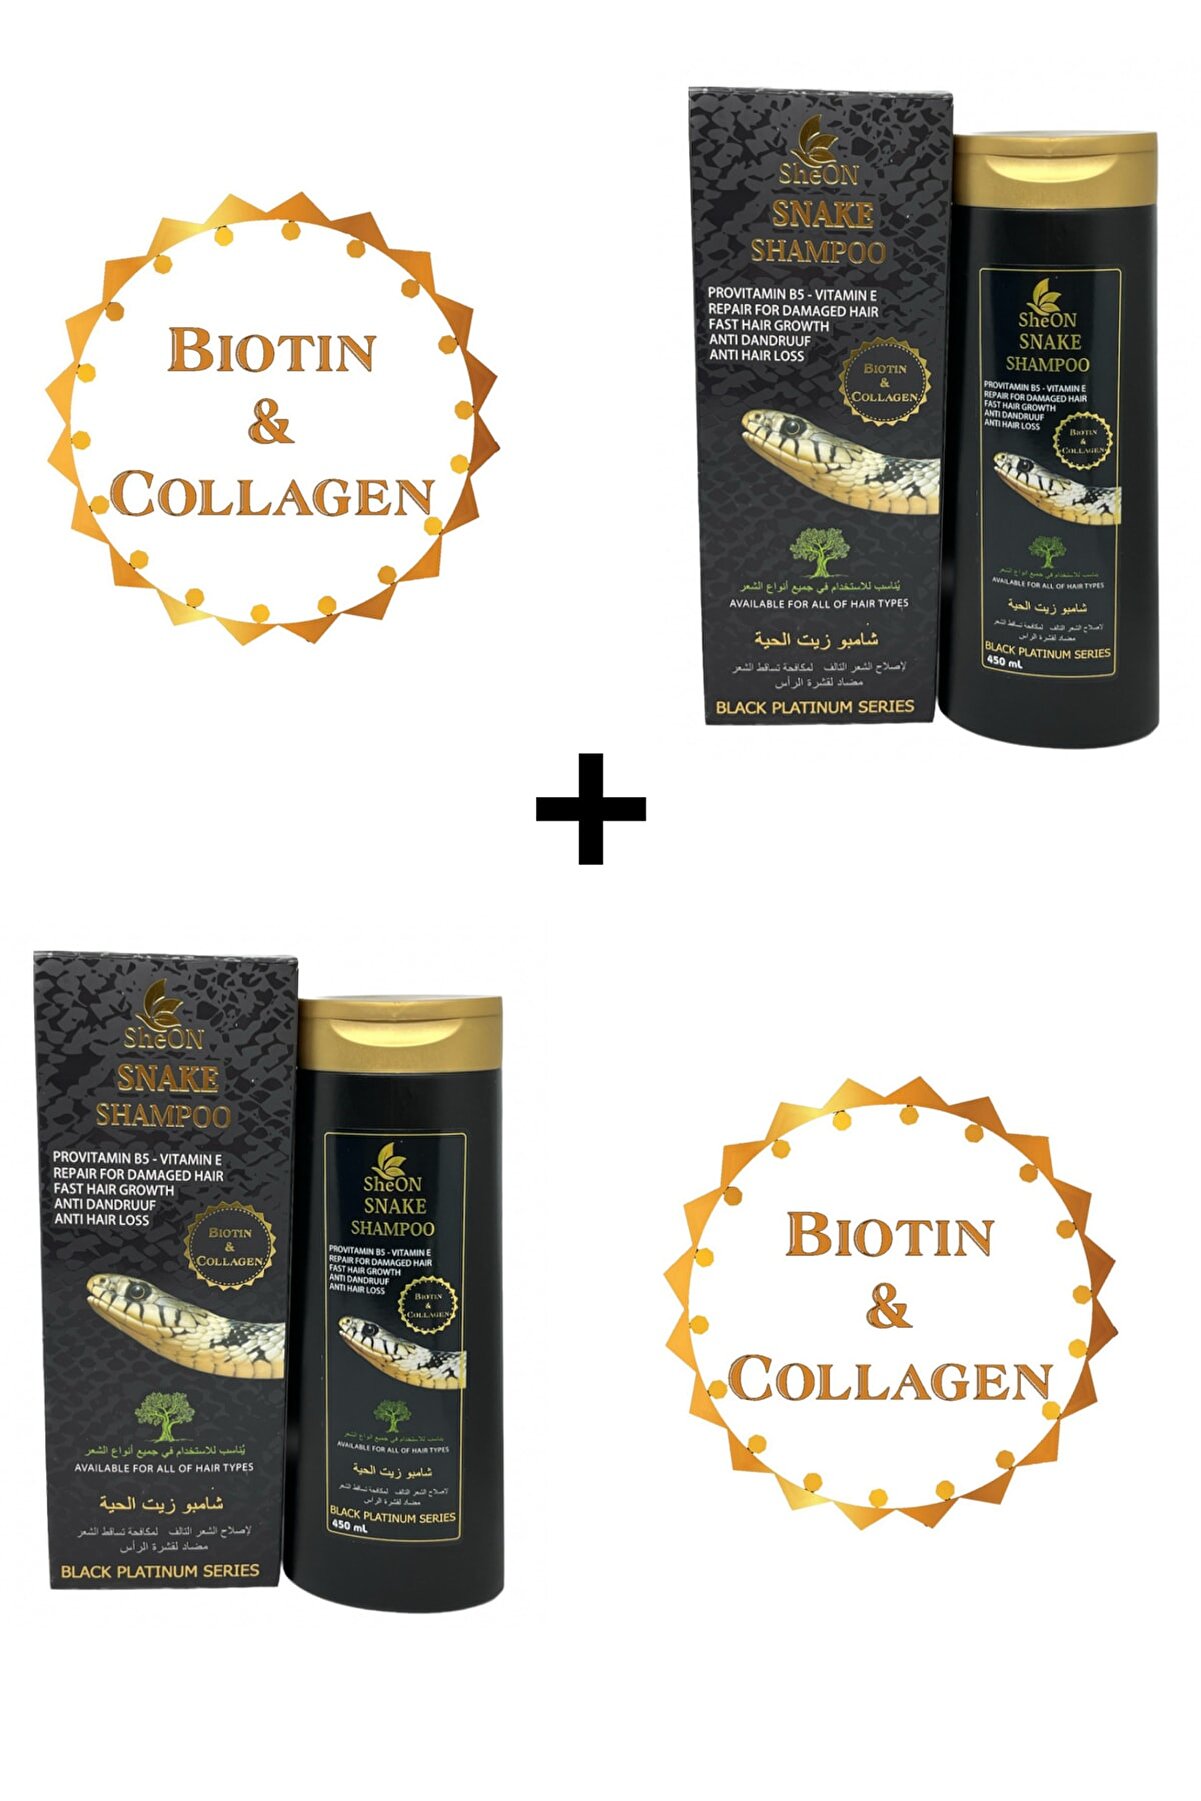 NQZZPLUS 2 Ad. Biotin & Collegen Snake Oil Shampoo